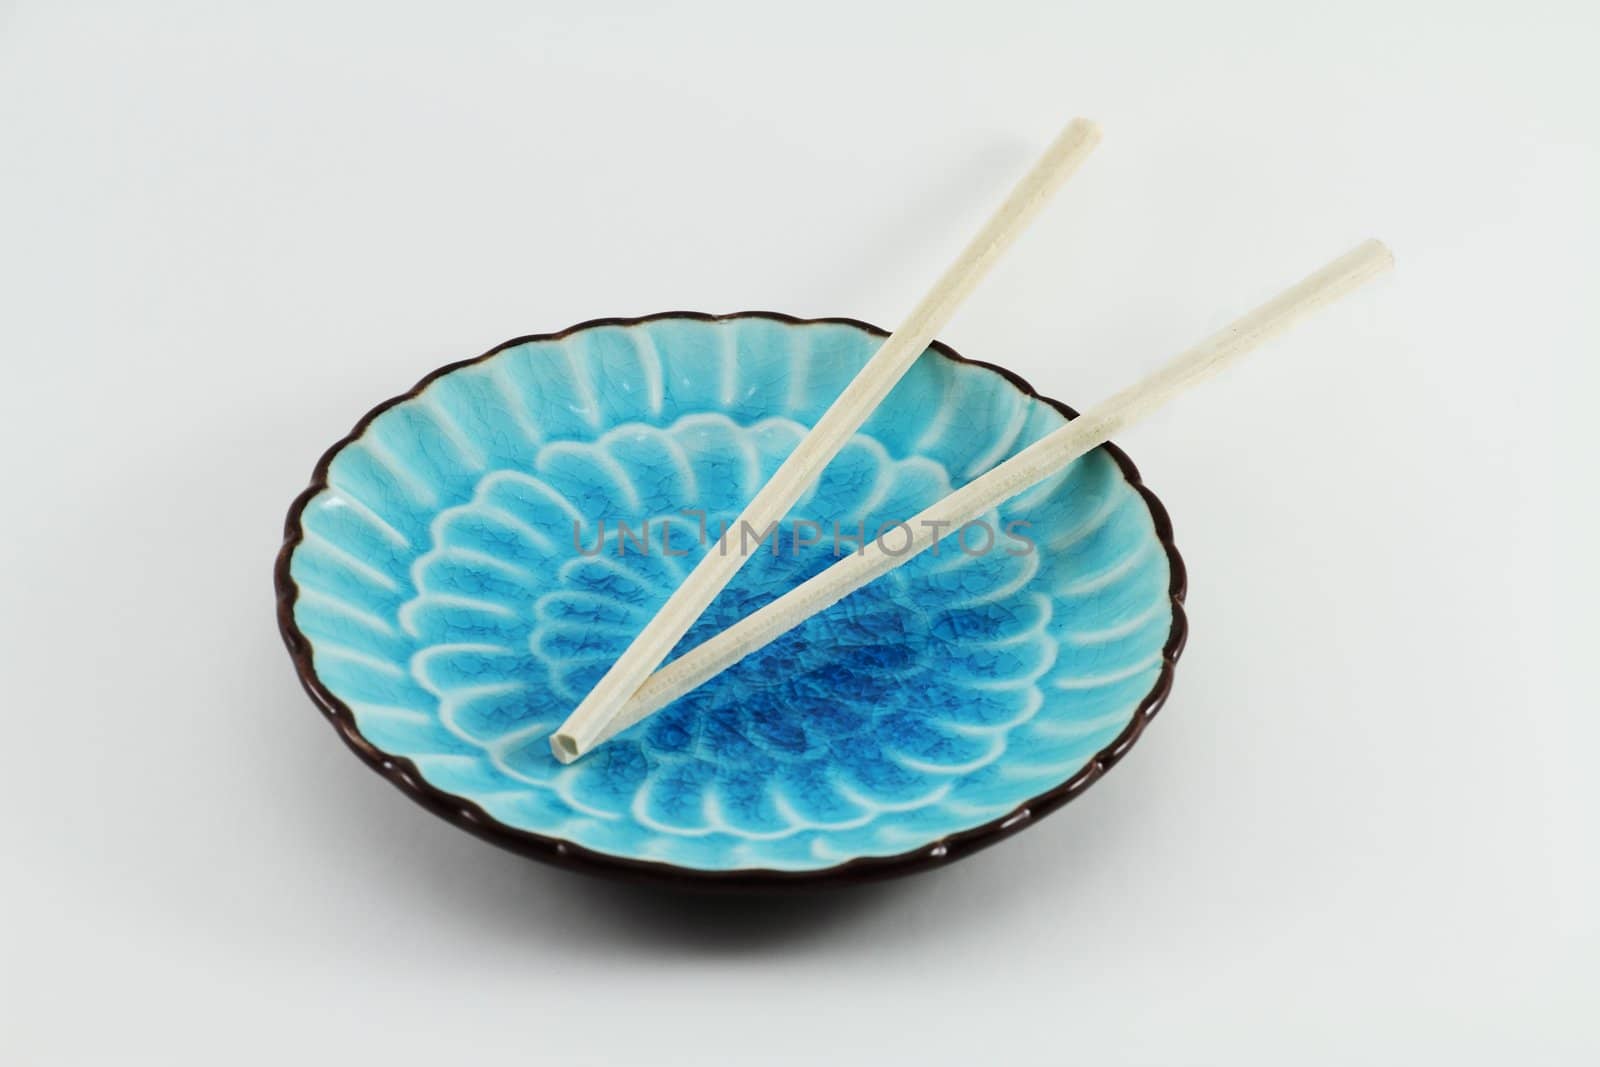 Chopsticks on Blue Plate by jasony00